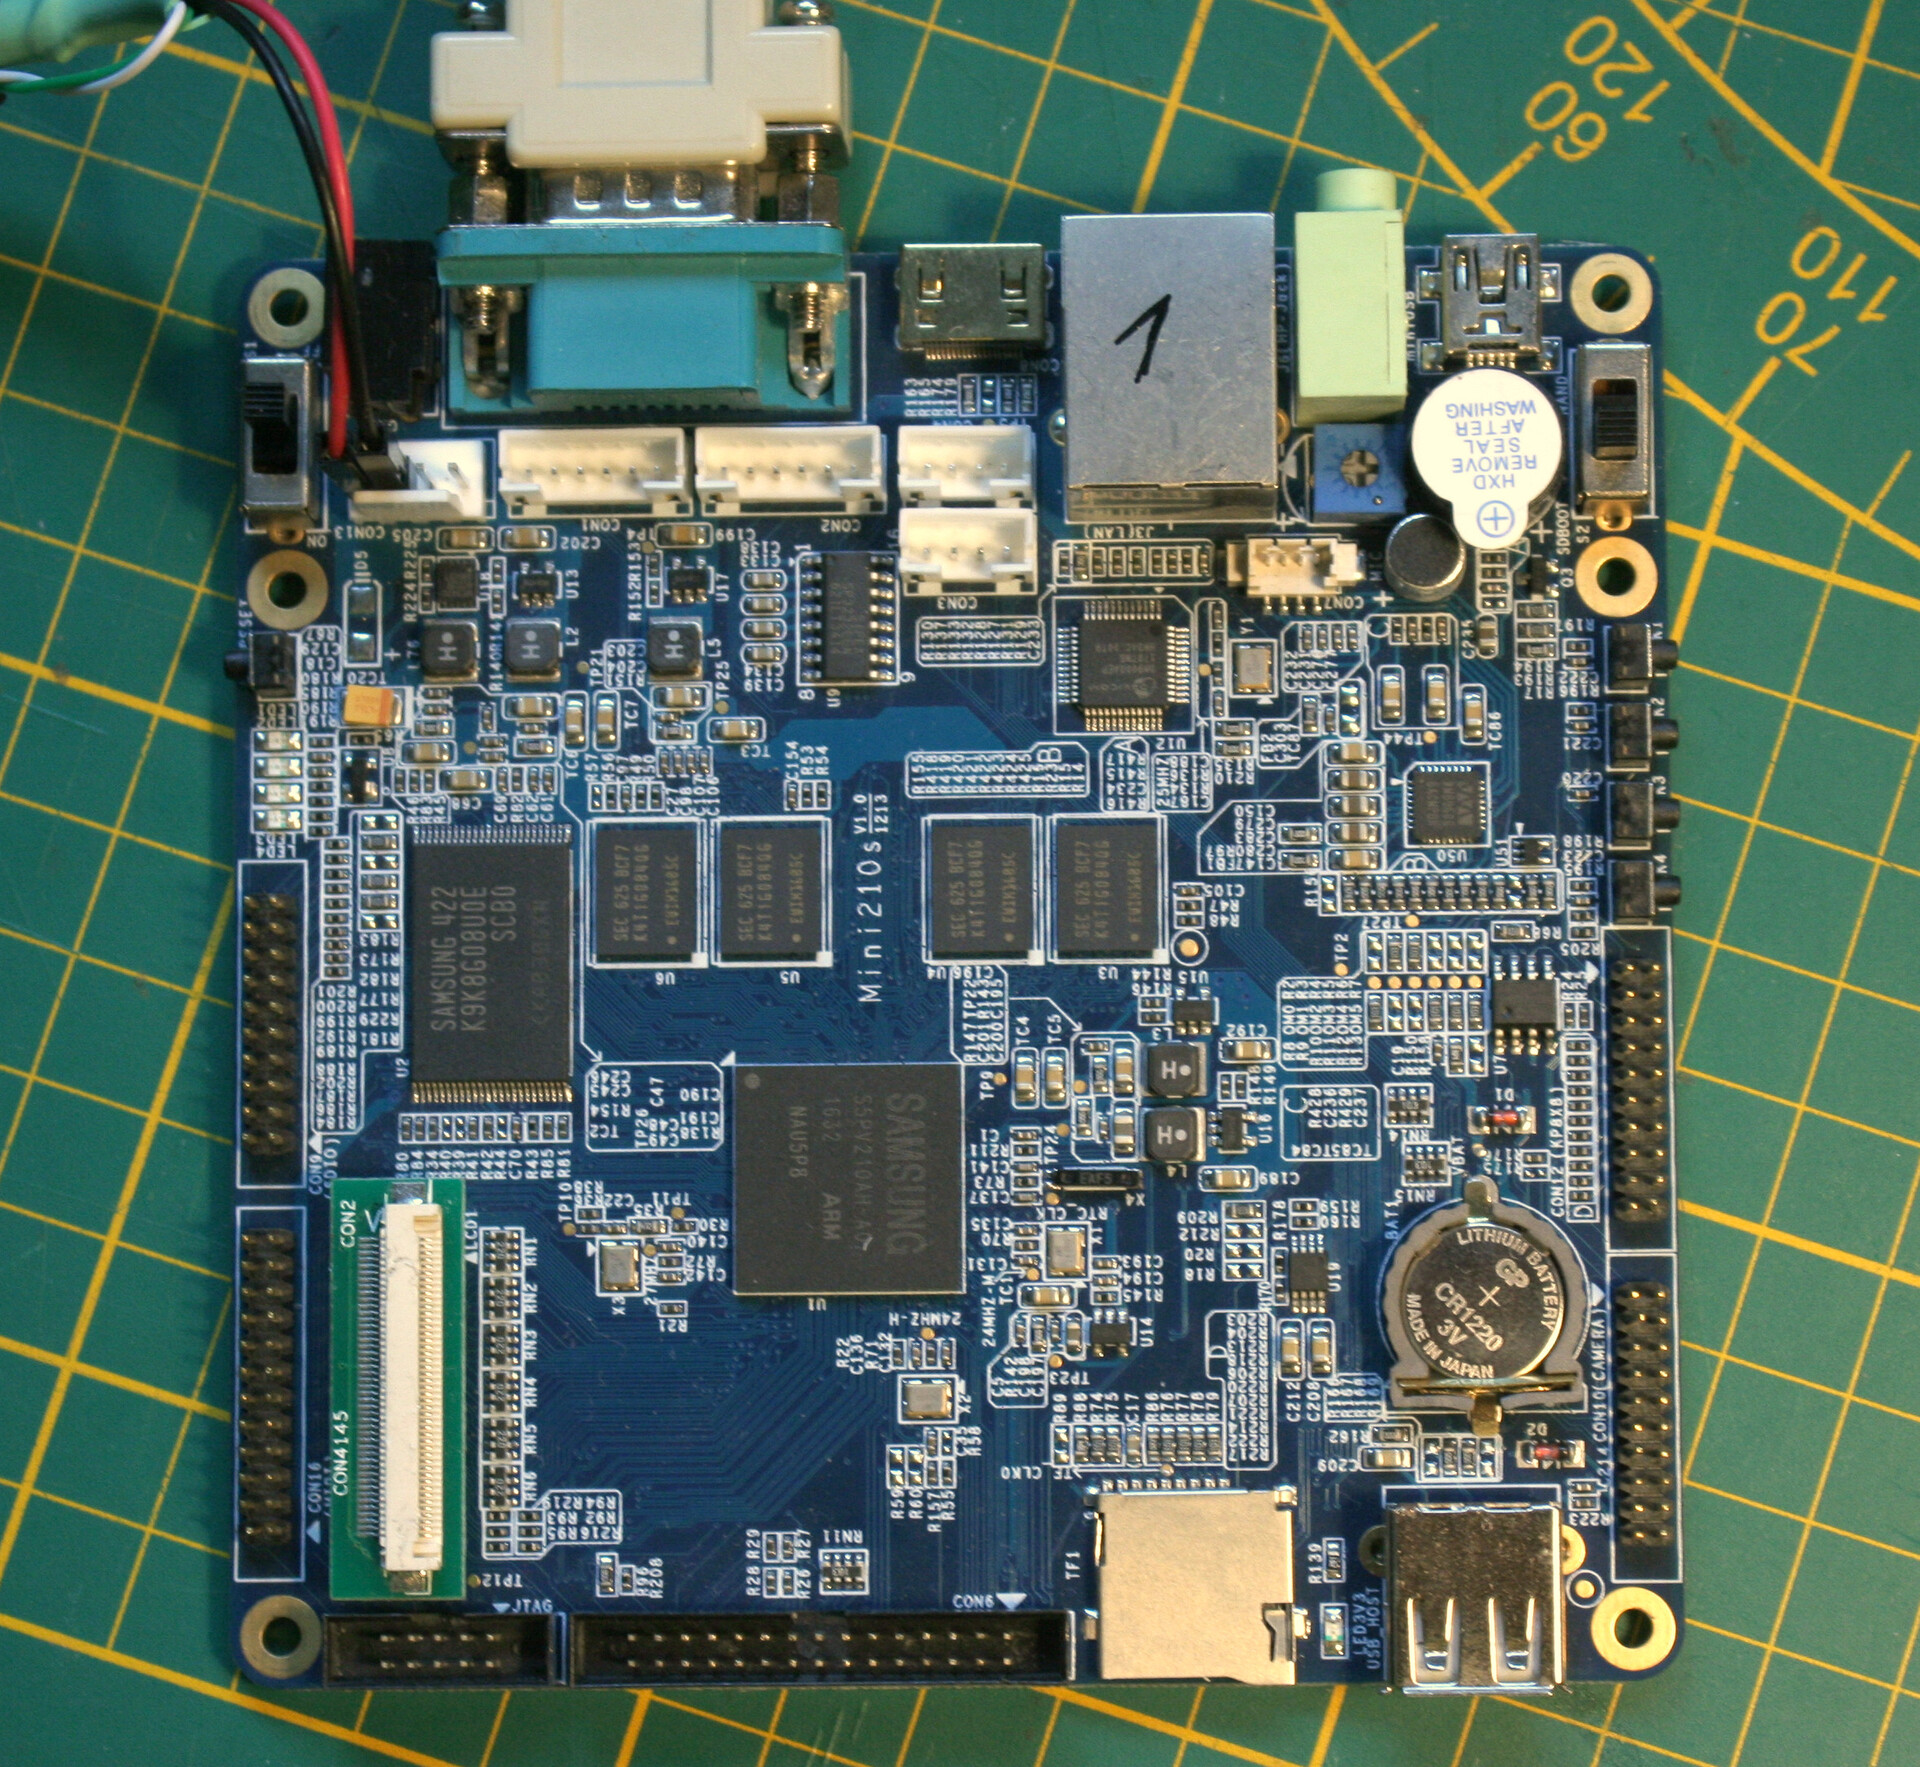 Image of a blue single board computer